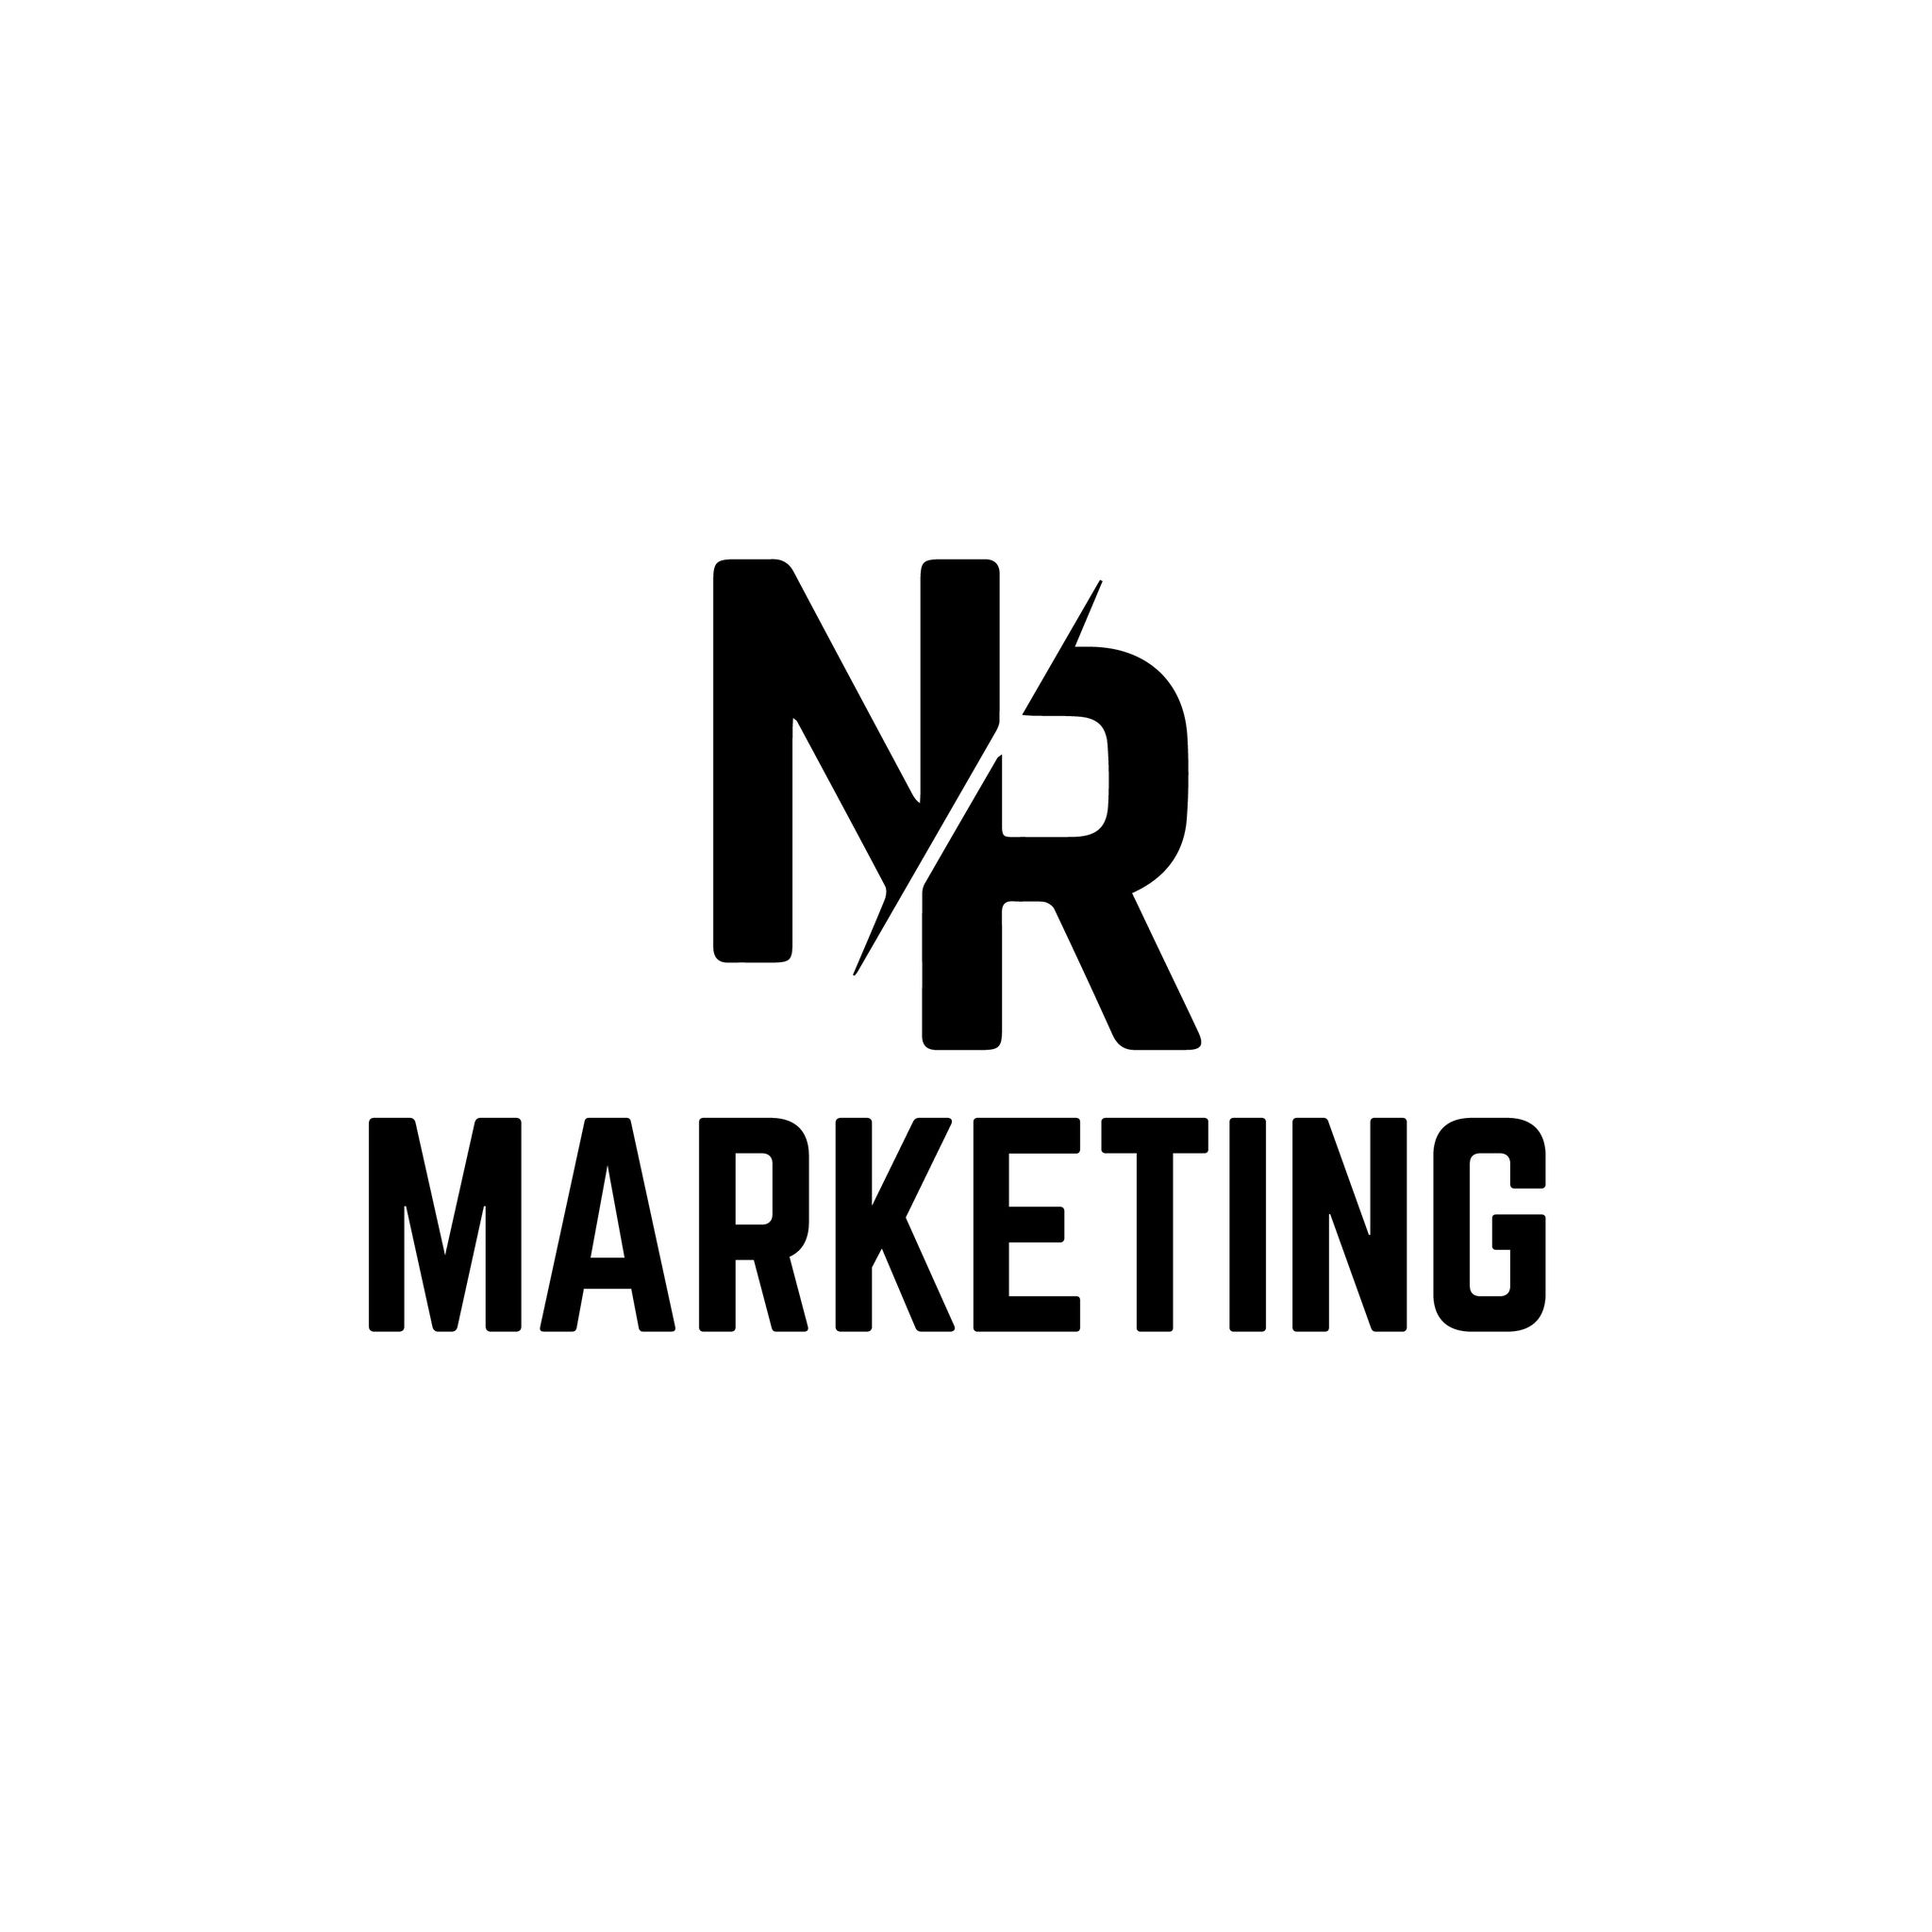 NR Marketing Becomes Content Creators No. 1 Favorite Marketing Agency